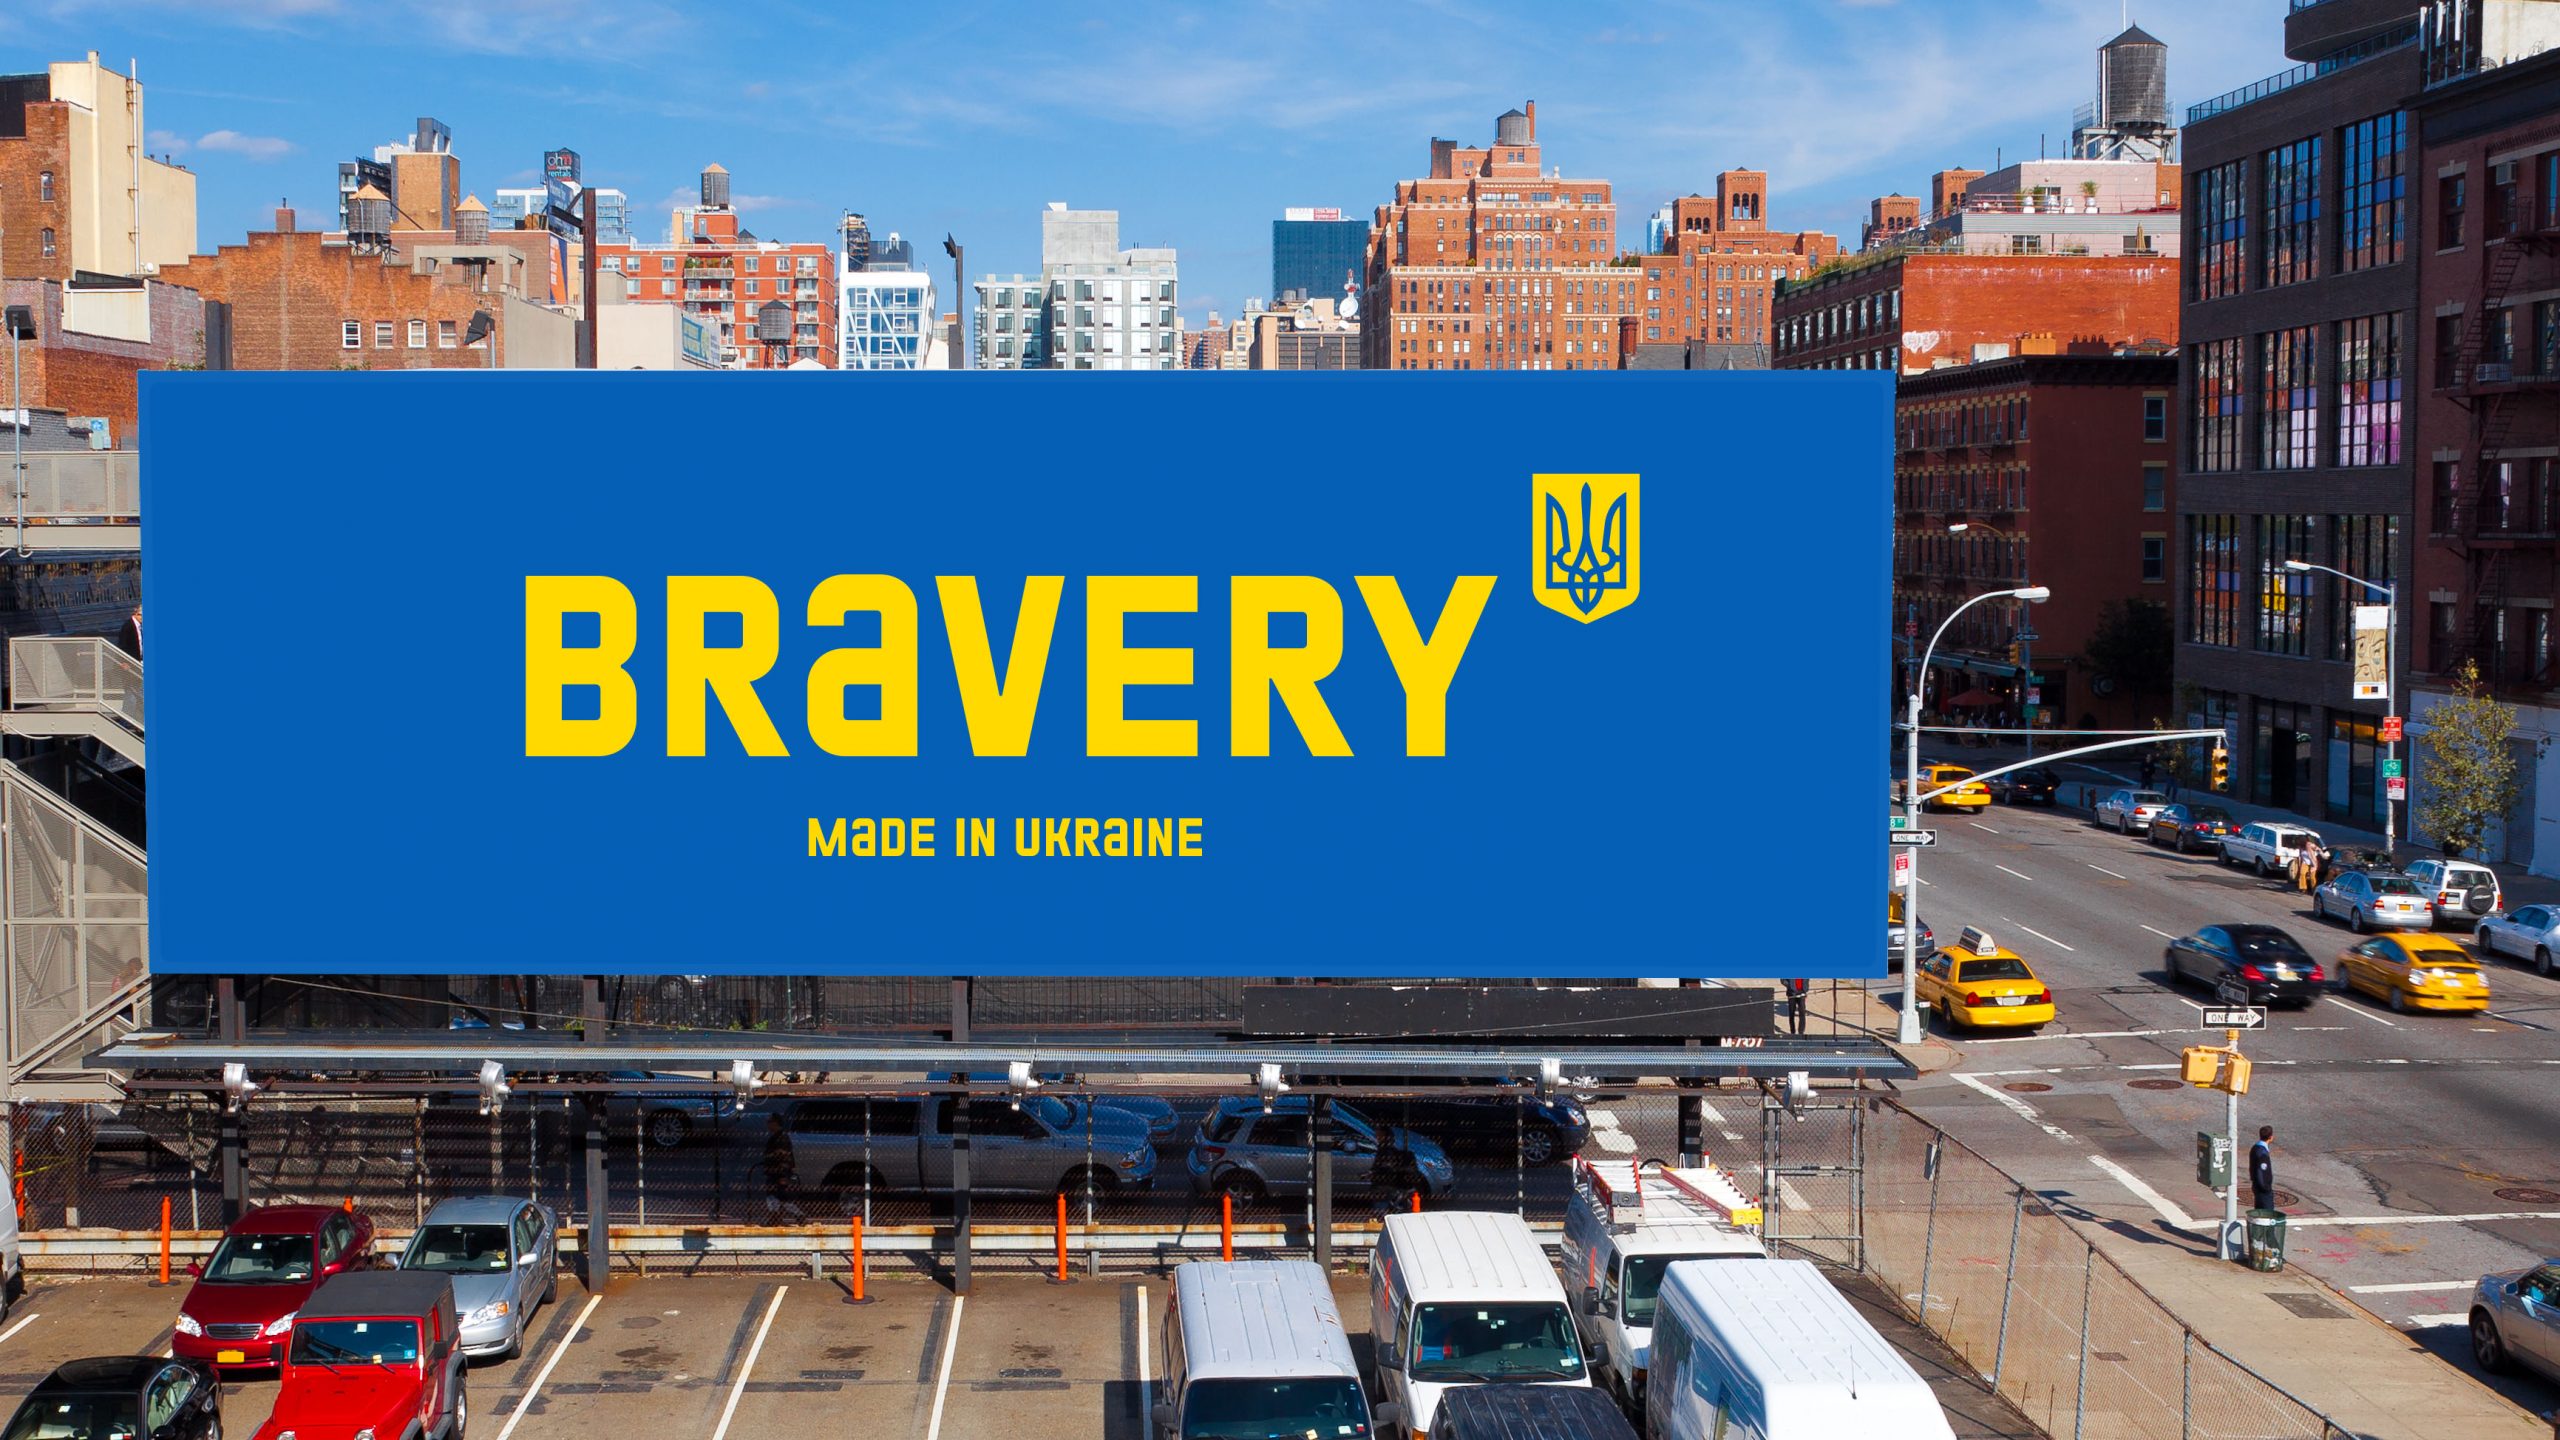 #BRAVEUKRAINE Banda Agency encourages creatives to highlight Ukraine’s bravery in their works_board